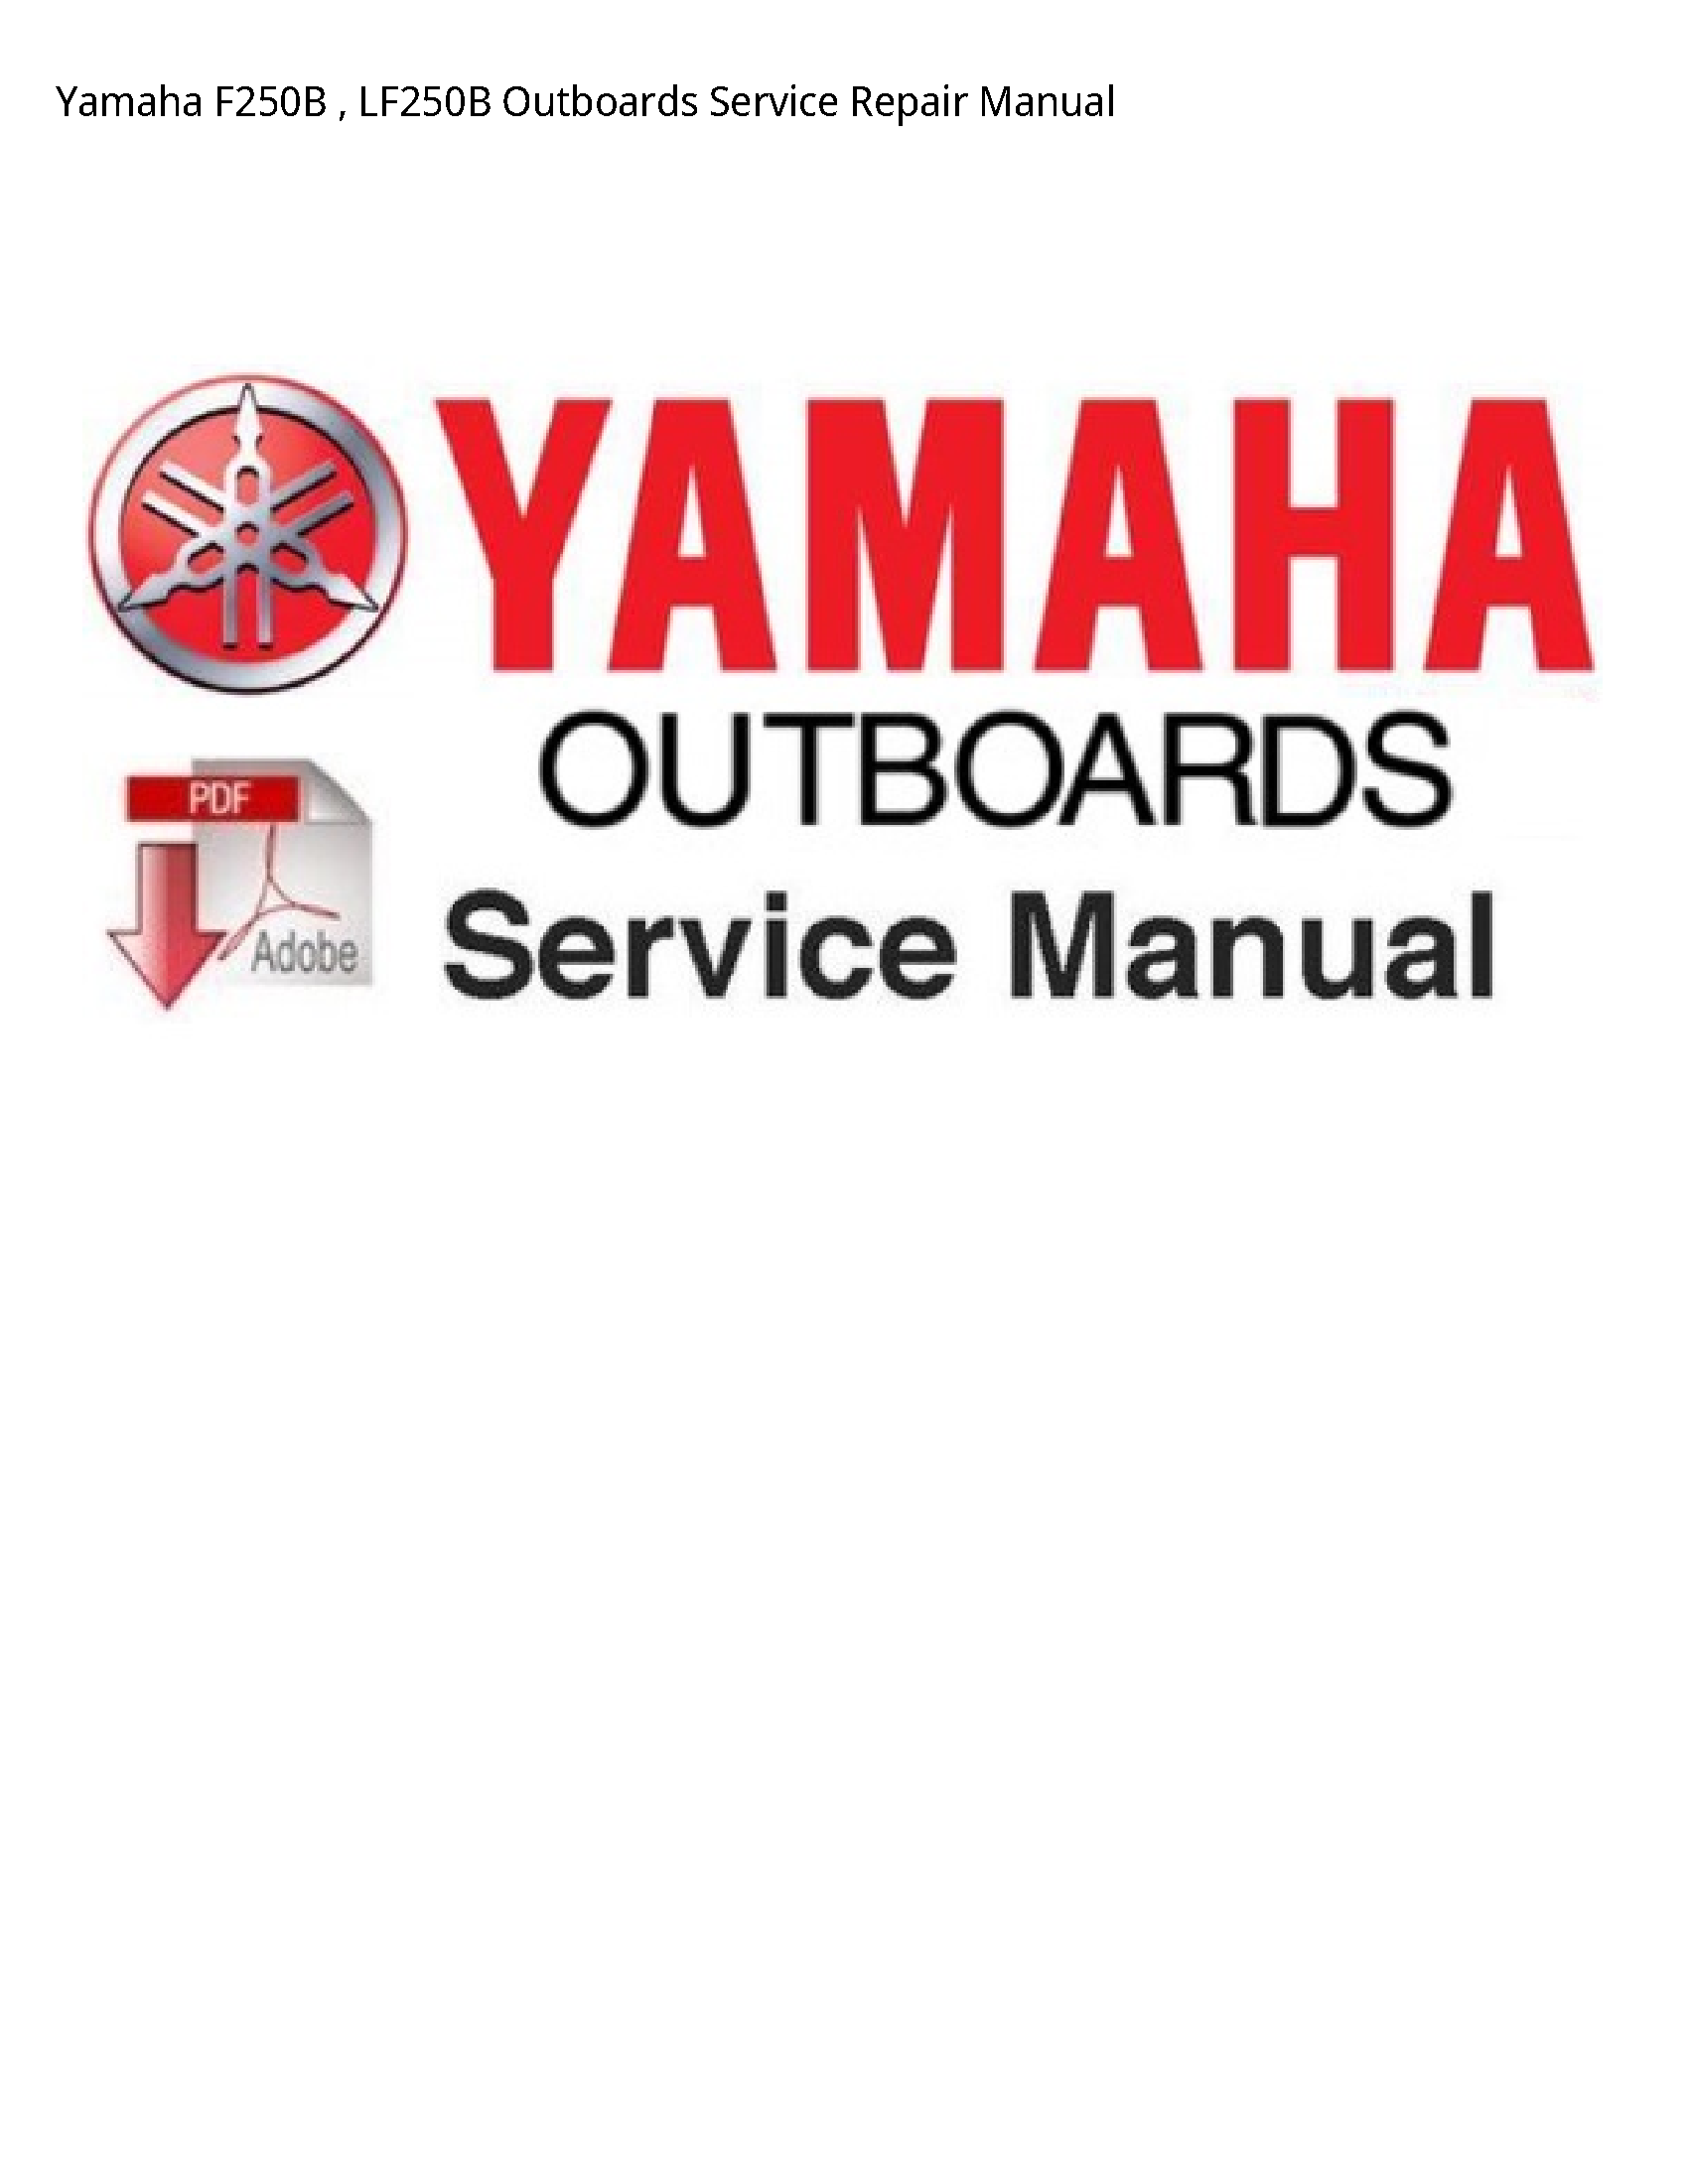 Yamaha F250B Outboards manual